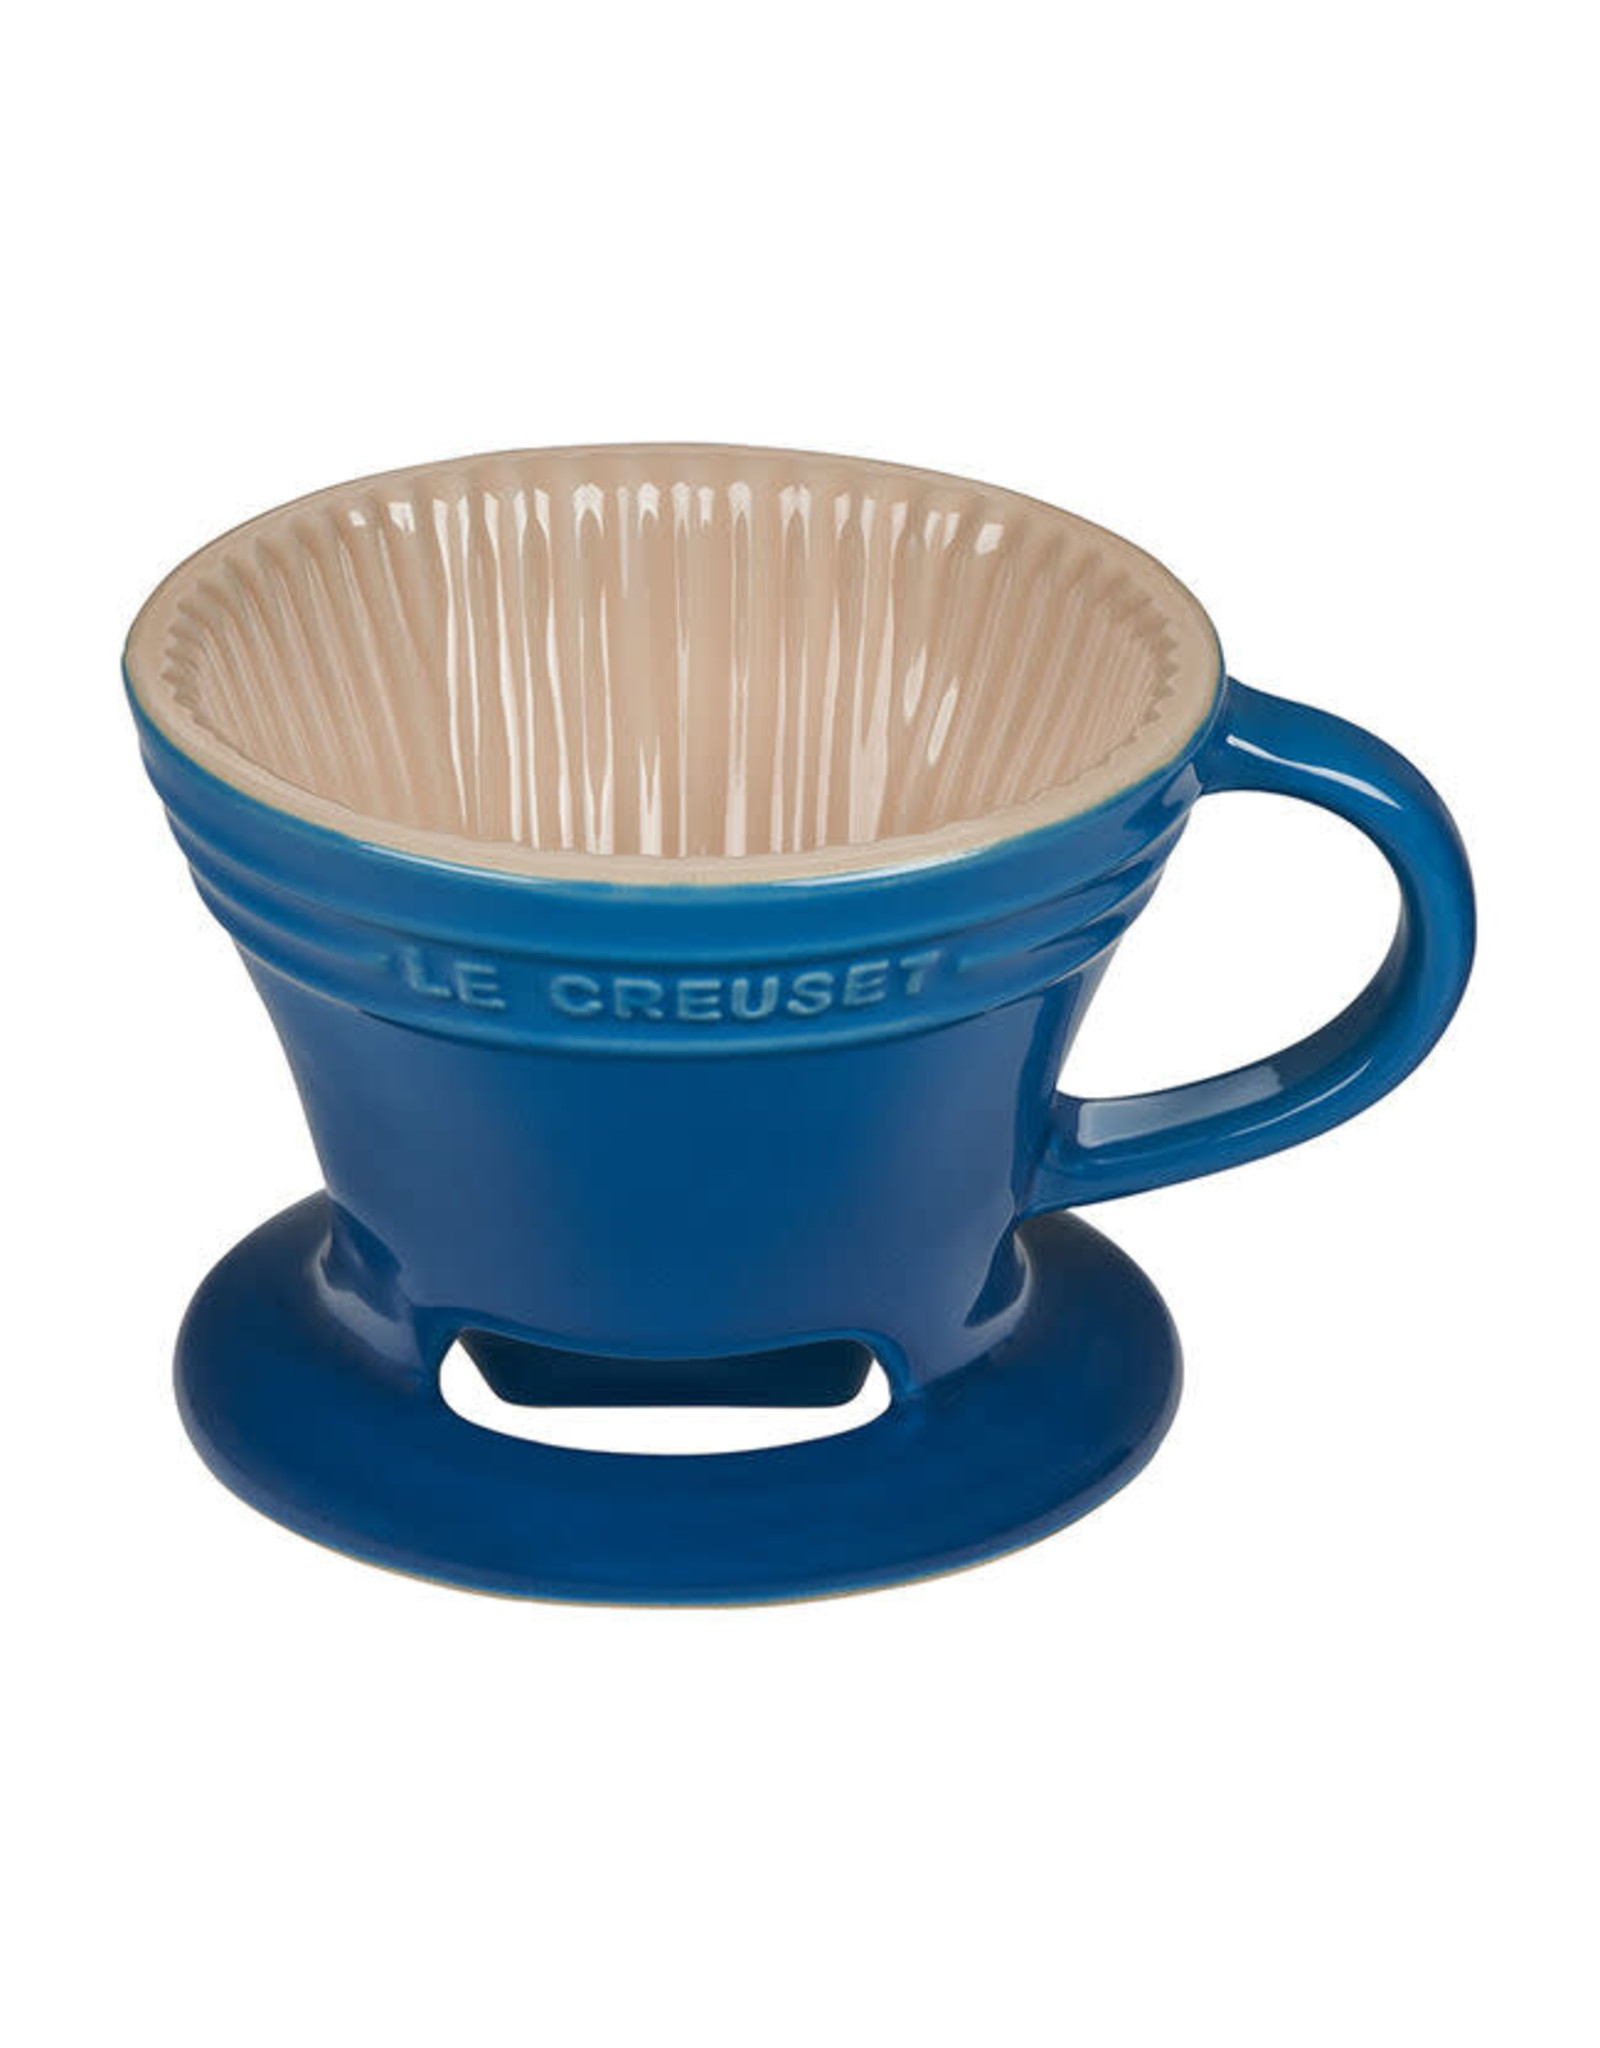 Le Creuset Pour Over Coffee maker - Marseille